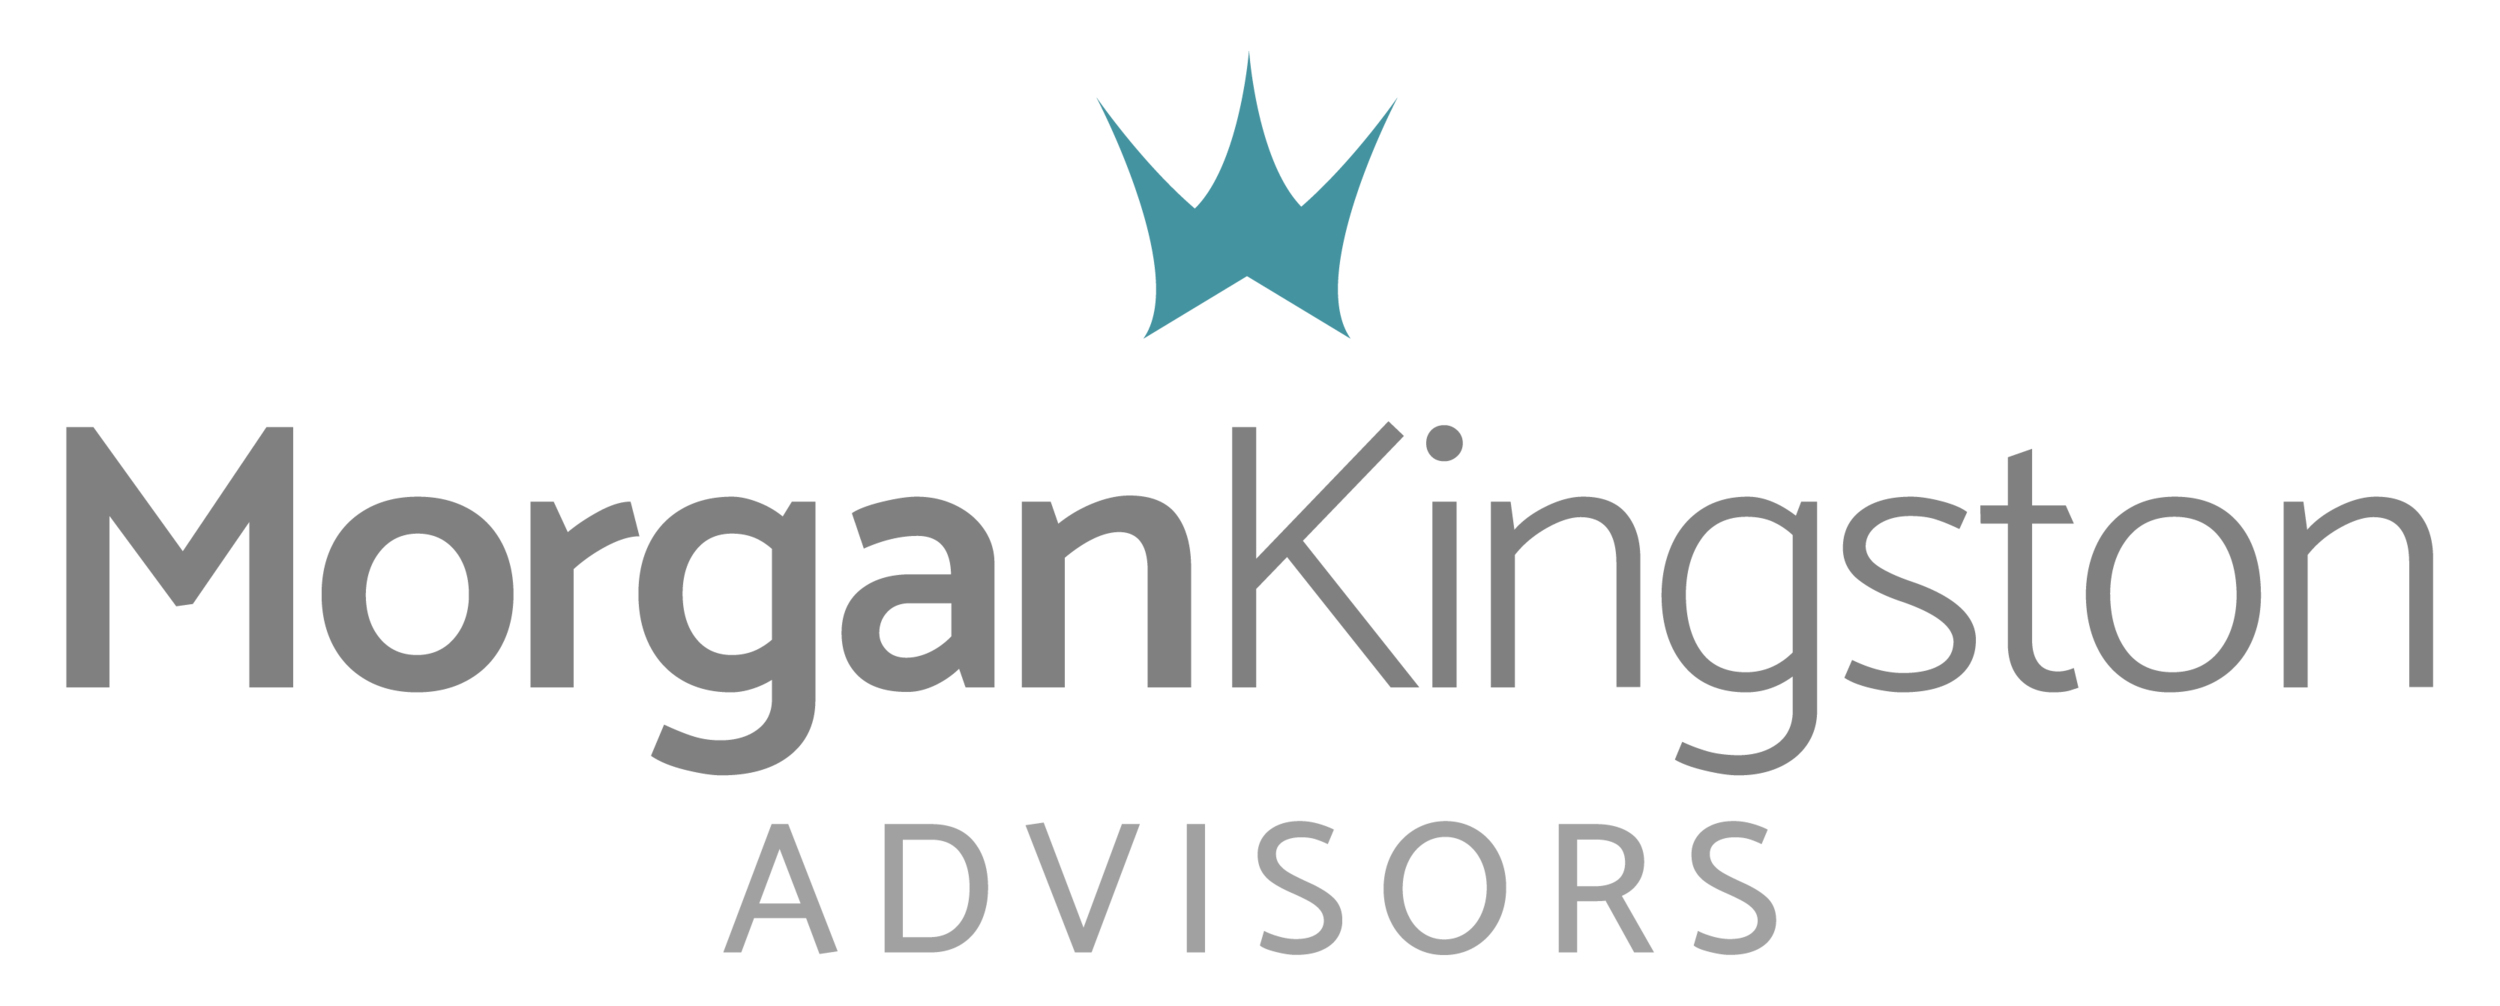 Morgan Kingston Advisors | Middle Market Investment Banking